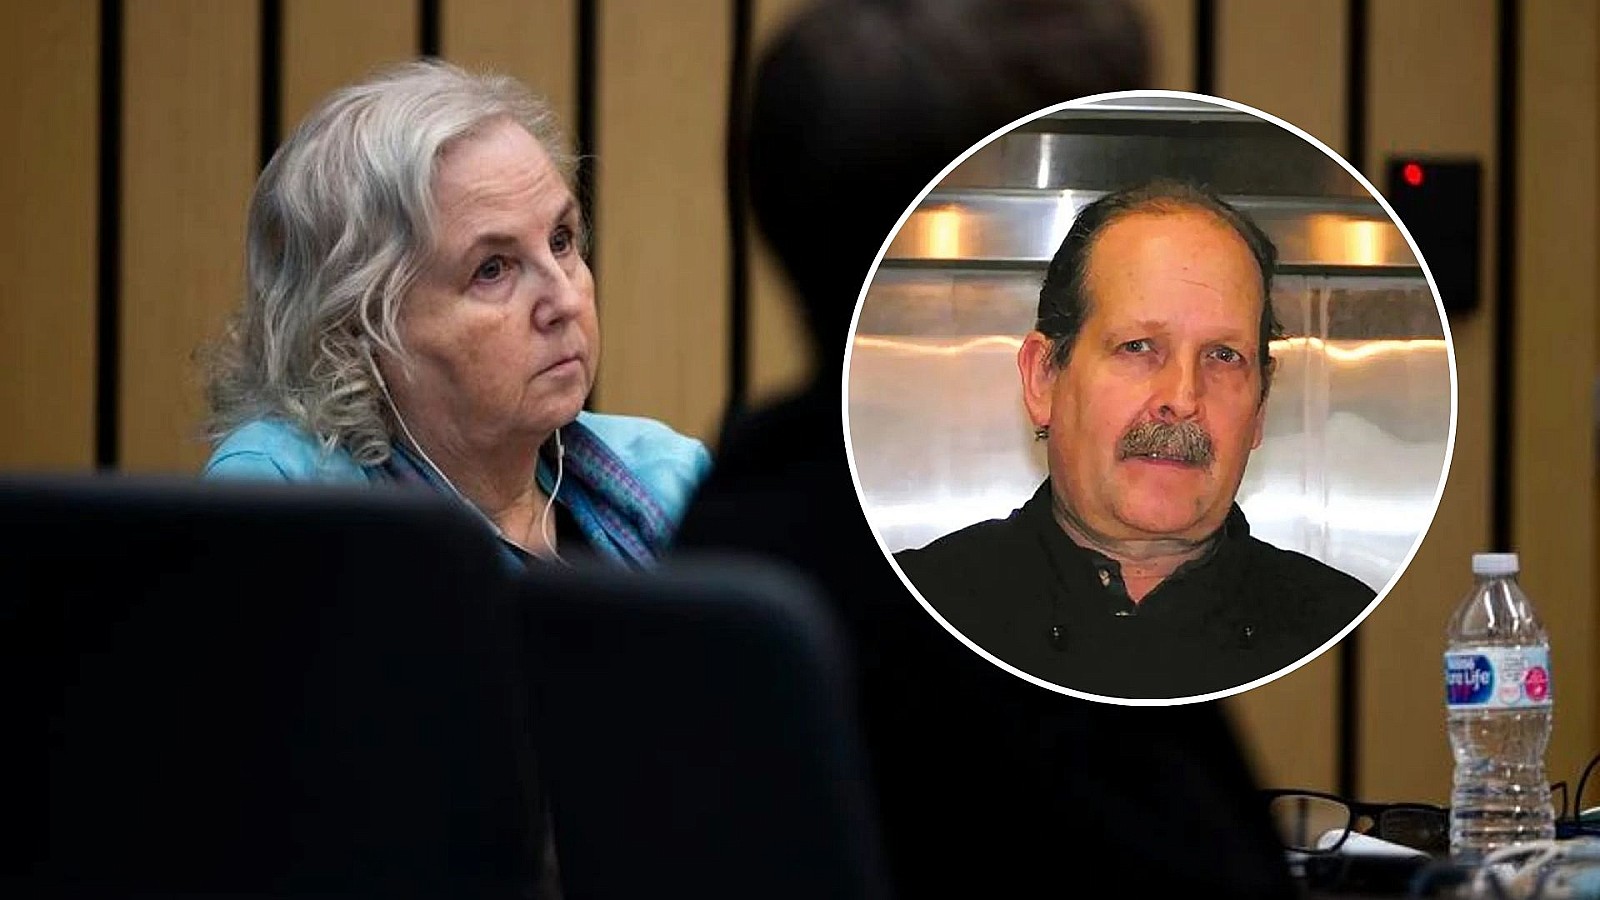 Escritora de "Cómo asesinar a tu marido" a juicio por matar al marido